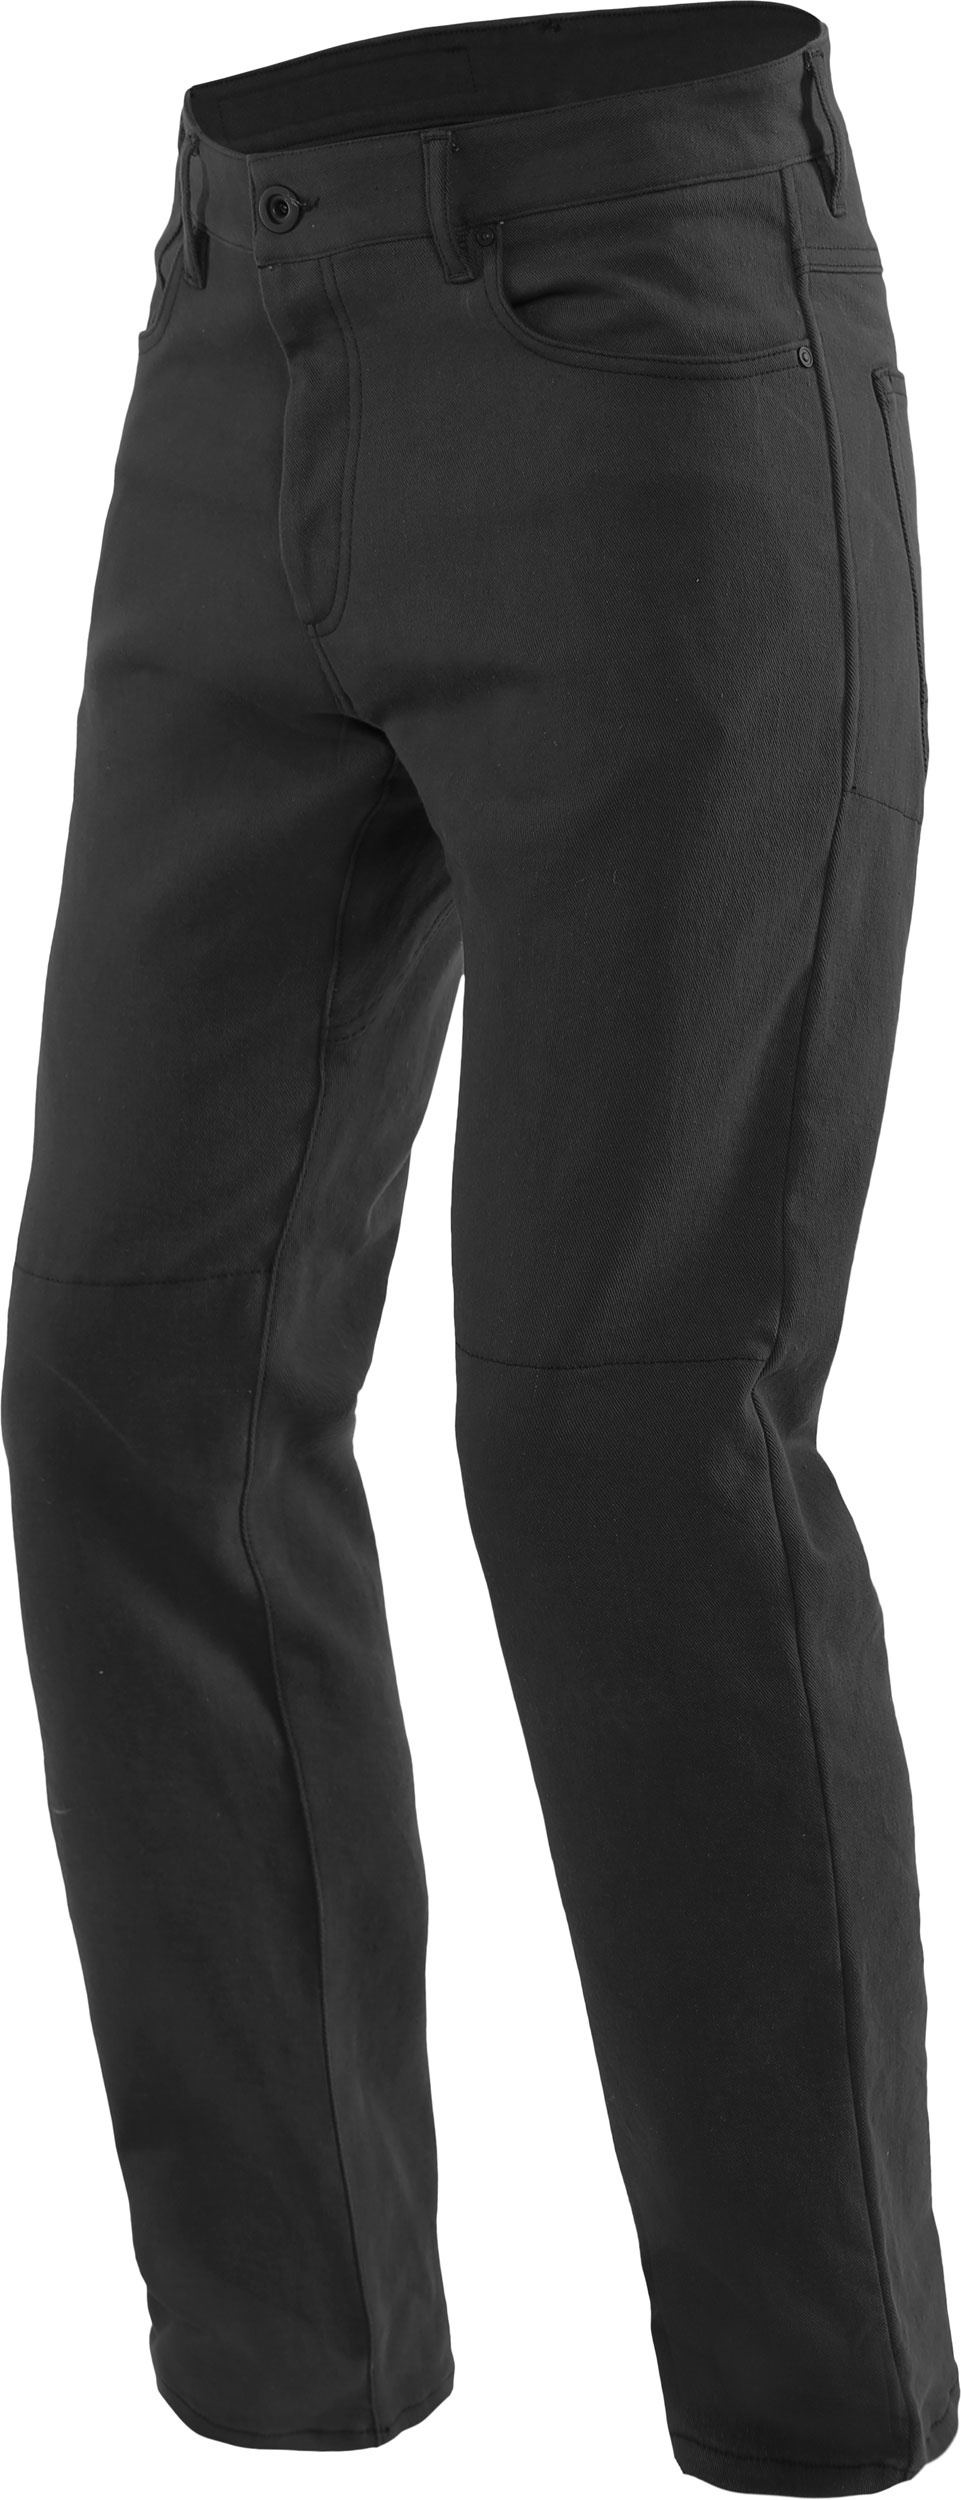 Dainese Classic Regular, pantalon en textile - Noir - 29